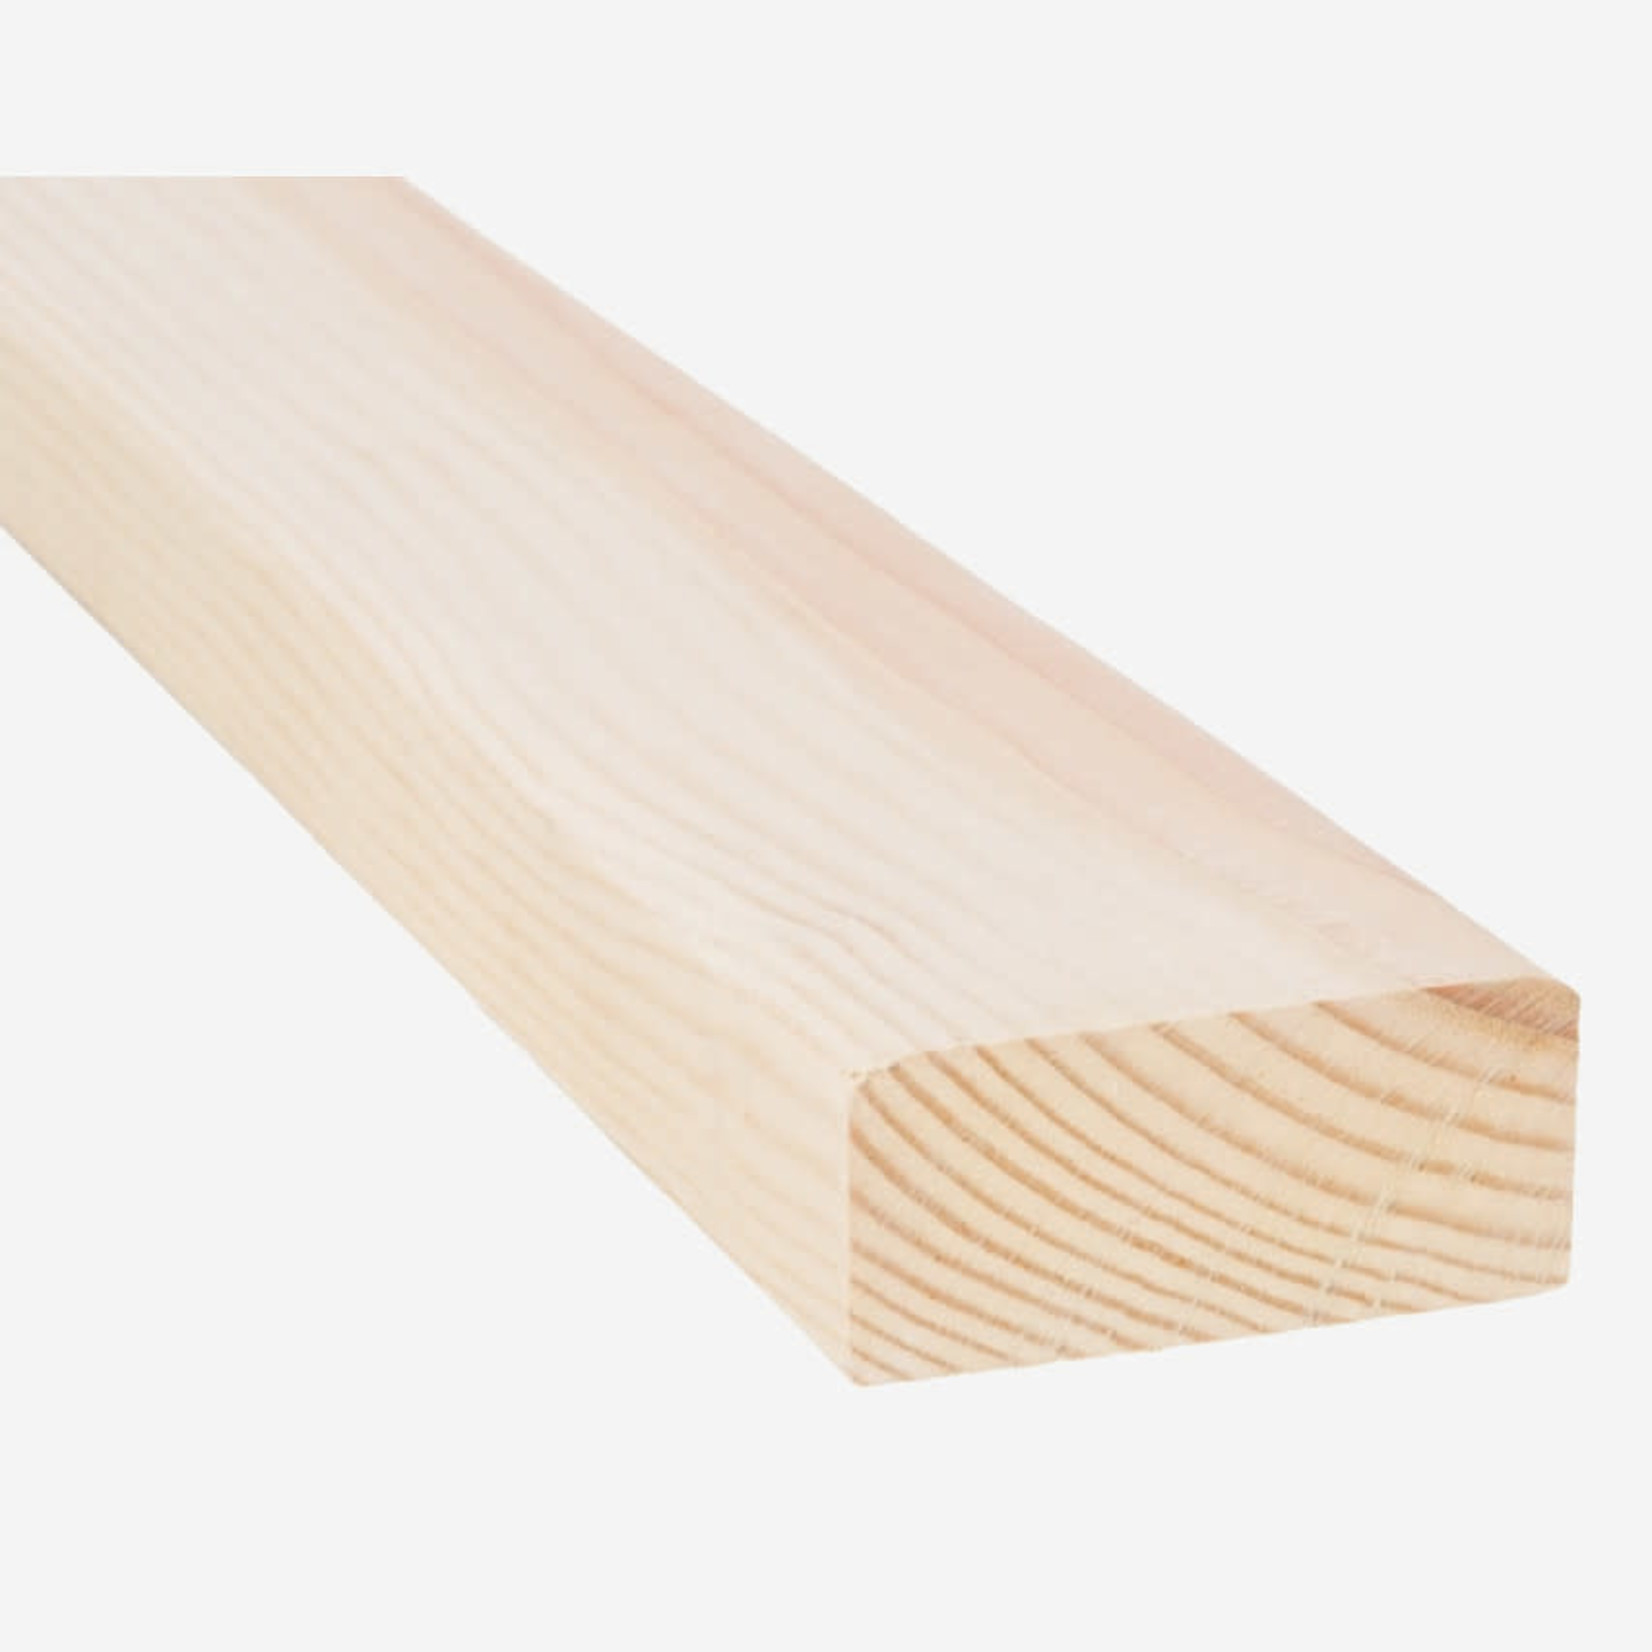 2 in. x 4 in. x 12 ft. Premium Douglas Fir Lumber